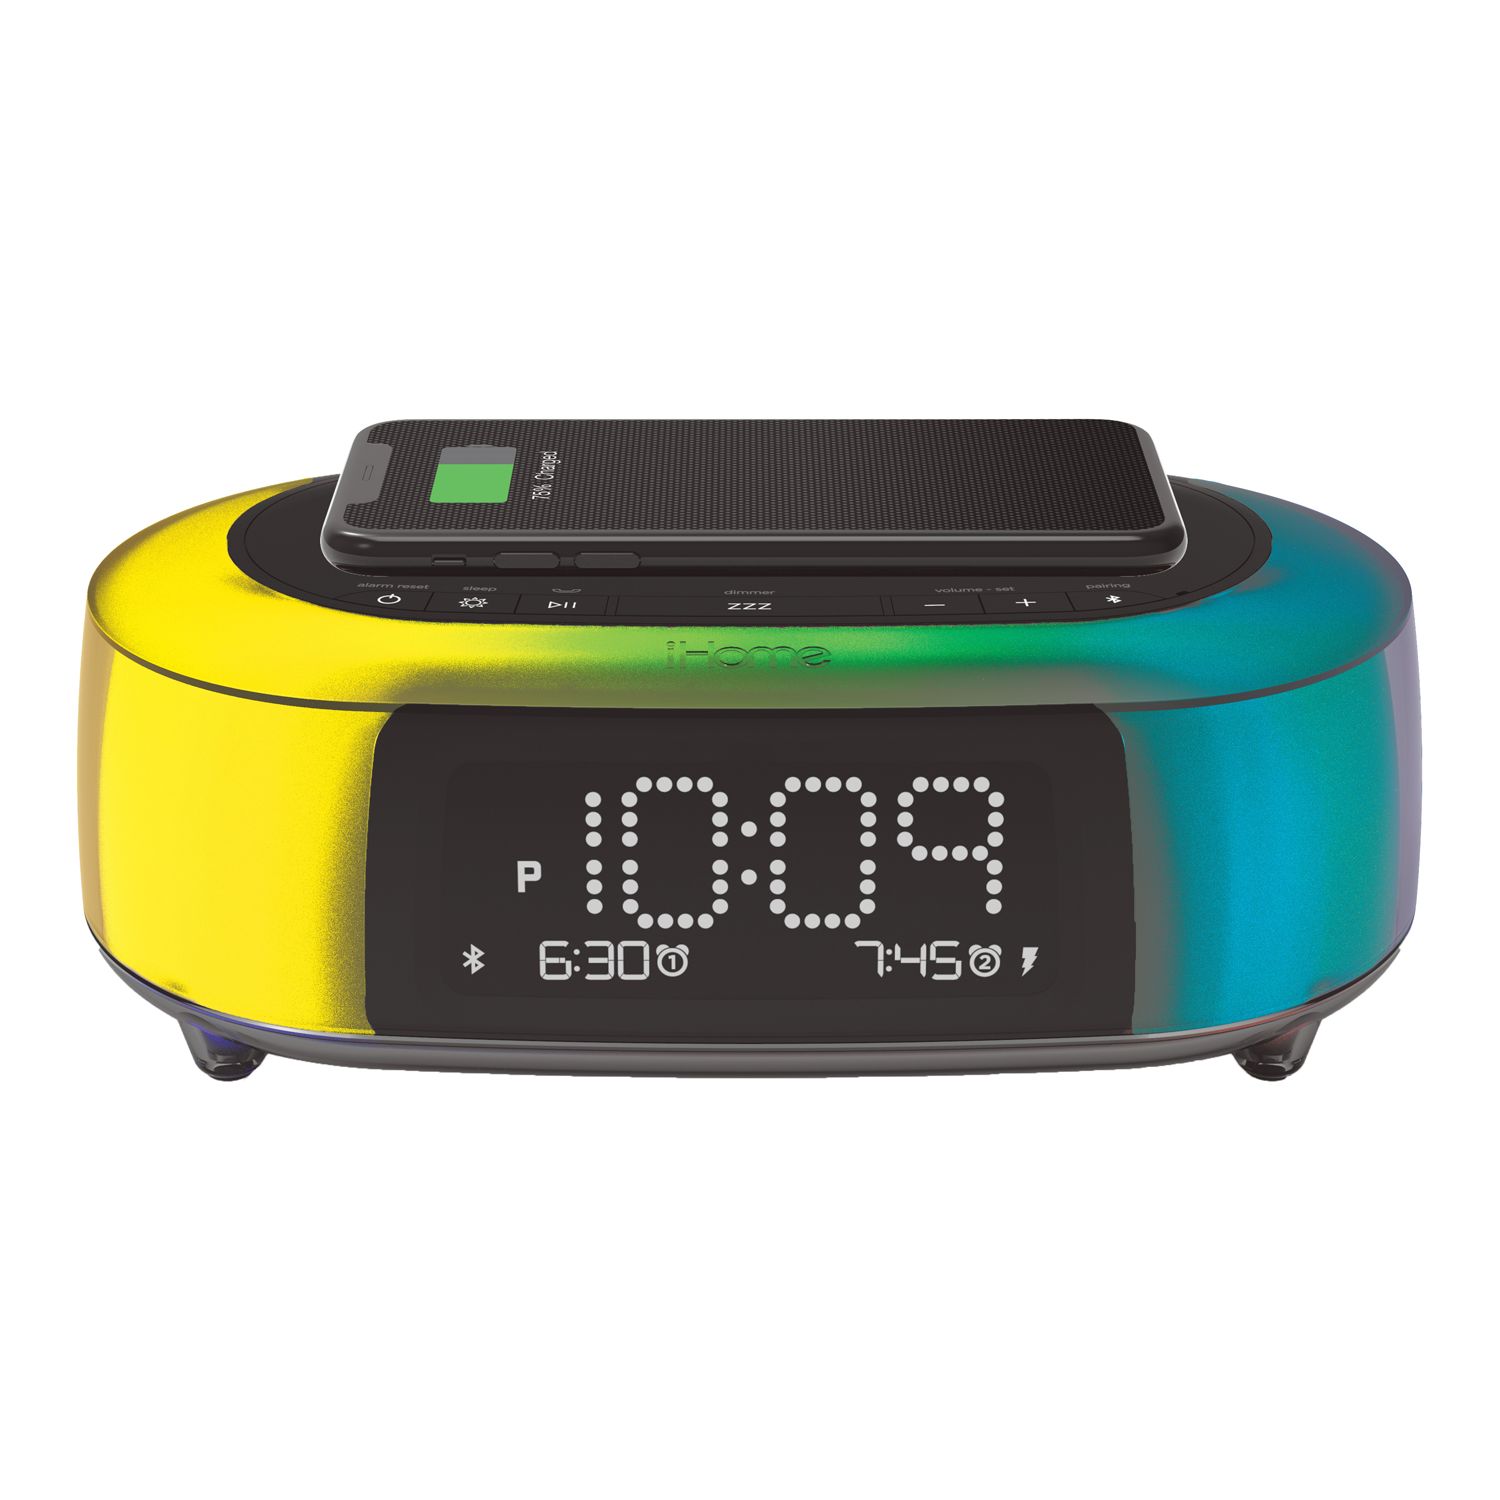 ihome bluetooth speaker alarm clock